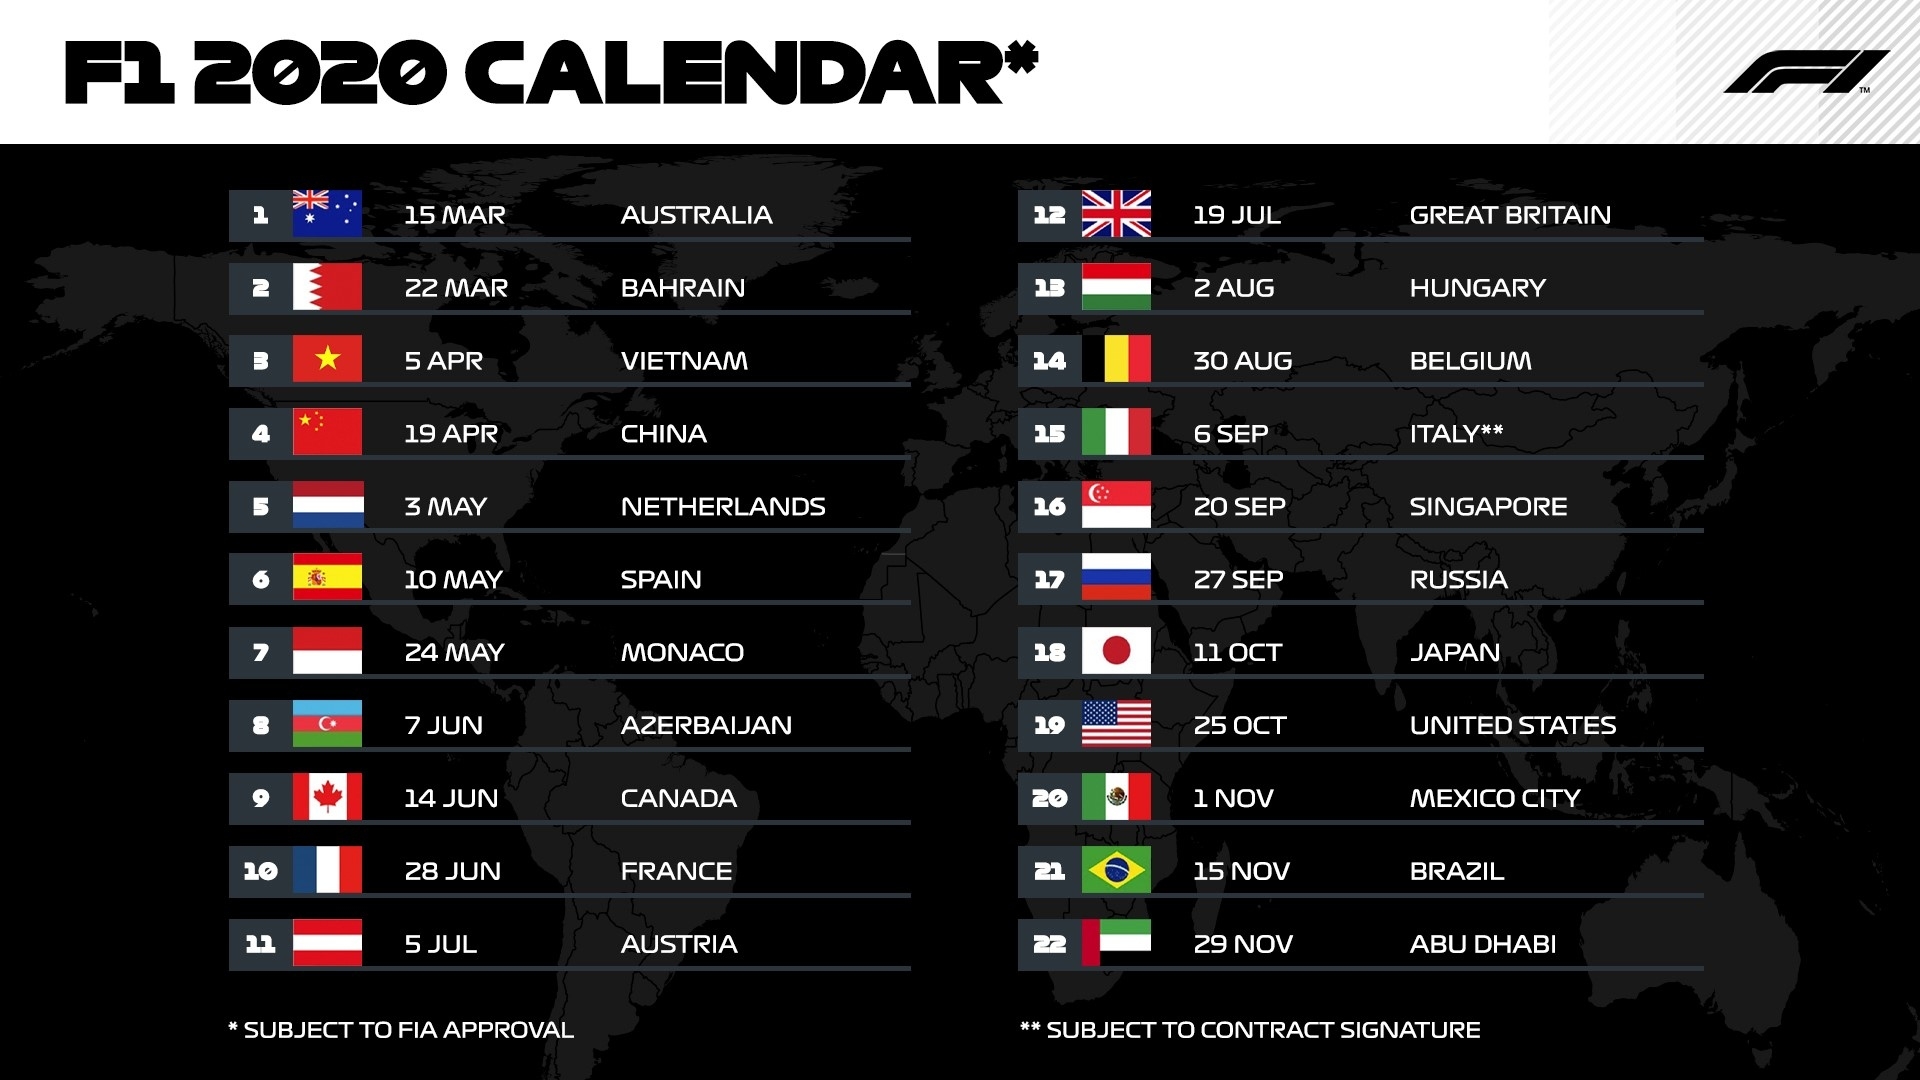 F1 Calendar 2020 - Enjoy A Record-Breaking 22 Races In The 2020 F1 Race Calendar